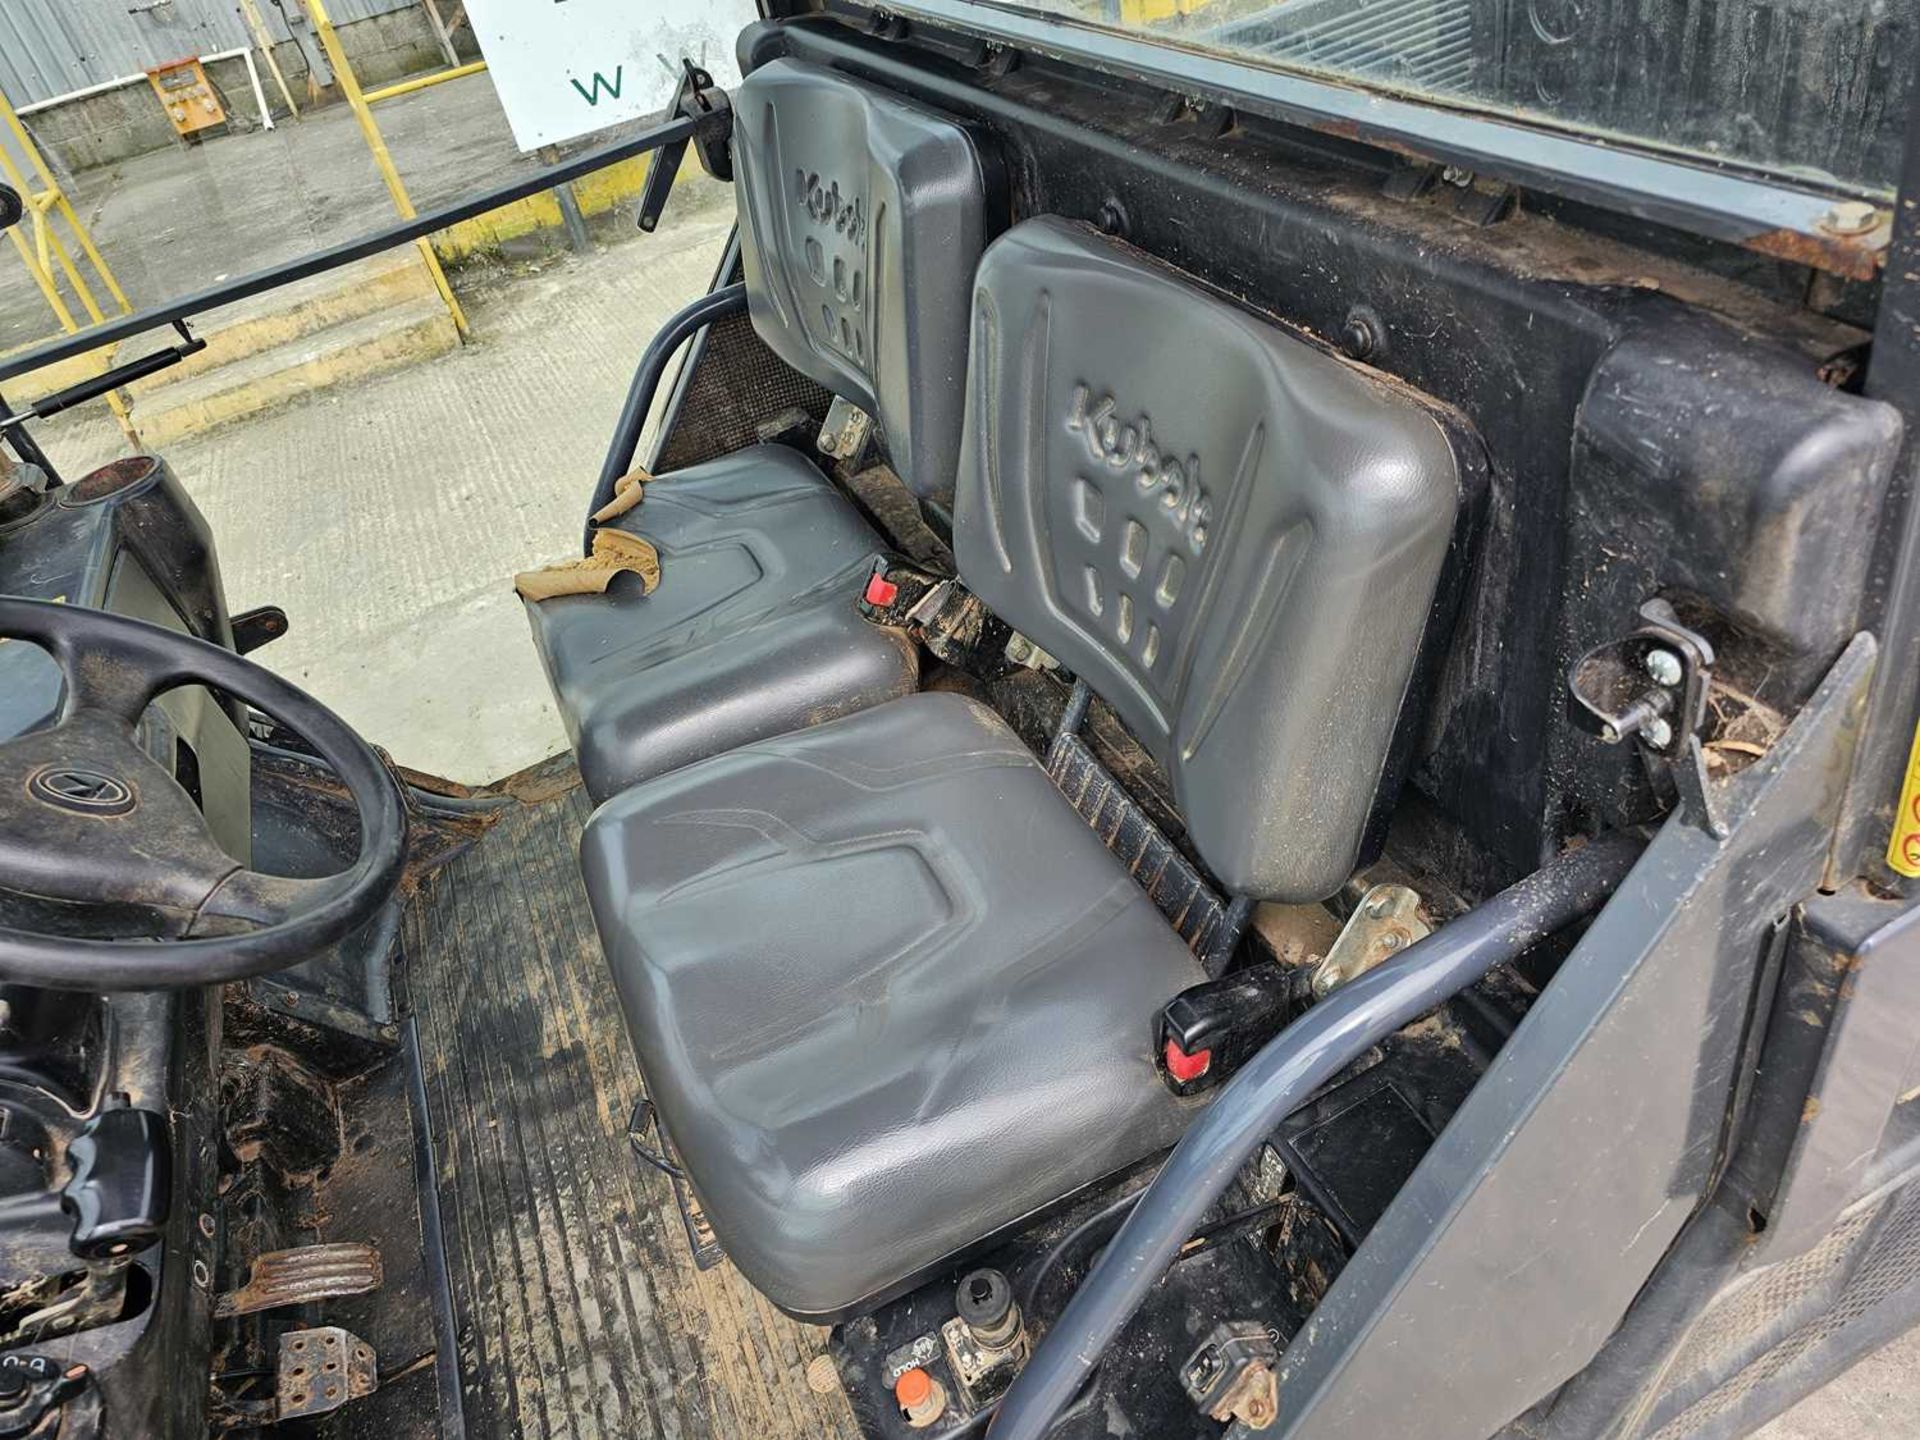 Kubota RTV900 4WD Diesel Utility Vehicle, Hydraulic Tipping Body, Full Cab, Power Steering, Winch (N - Image 17 of 22